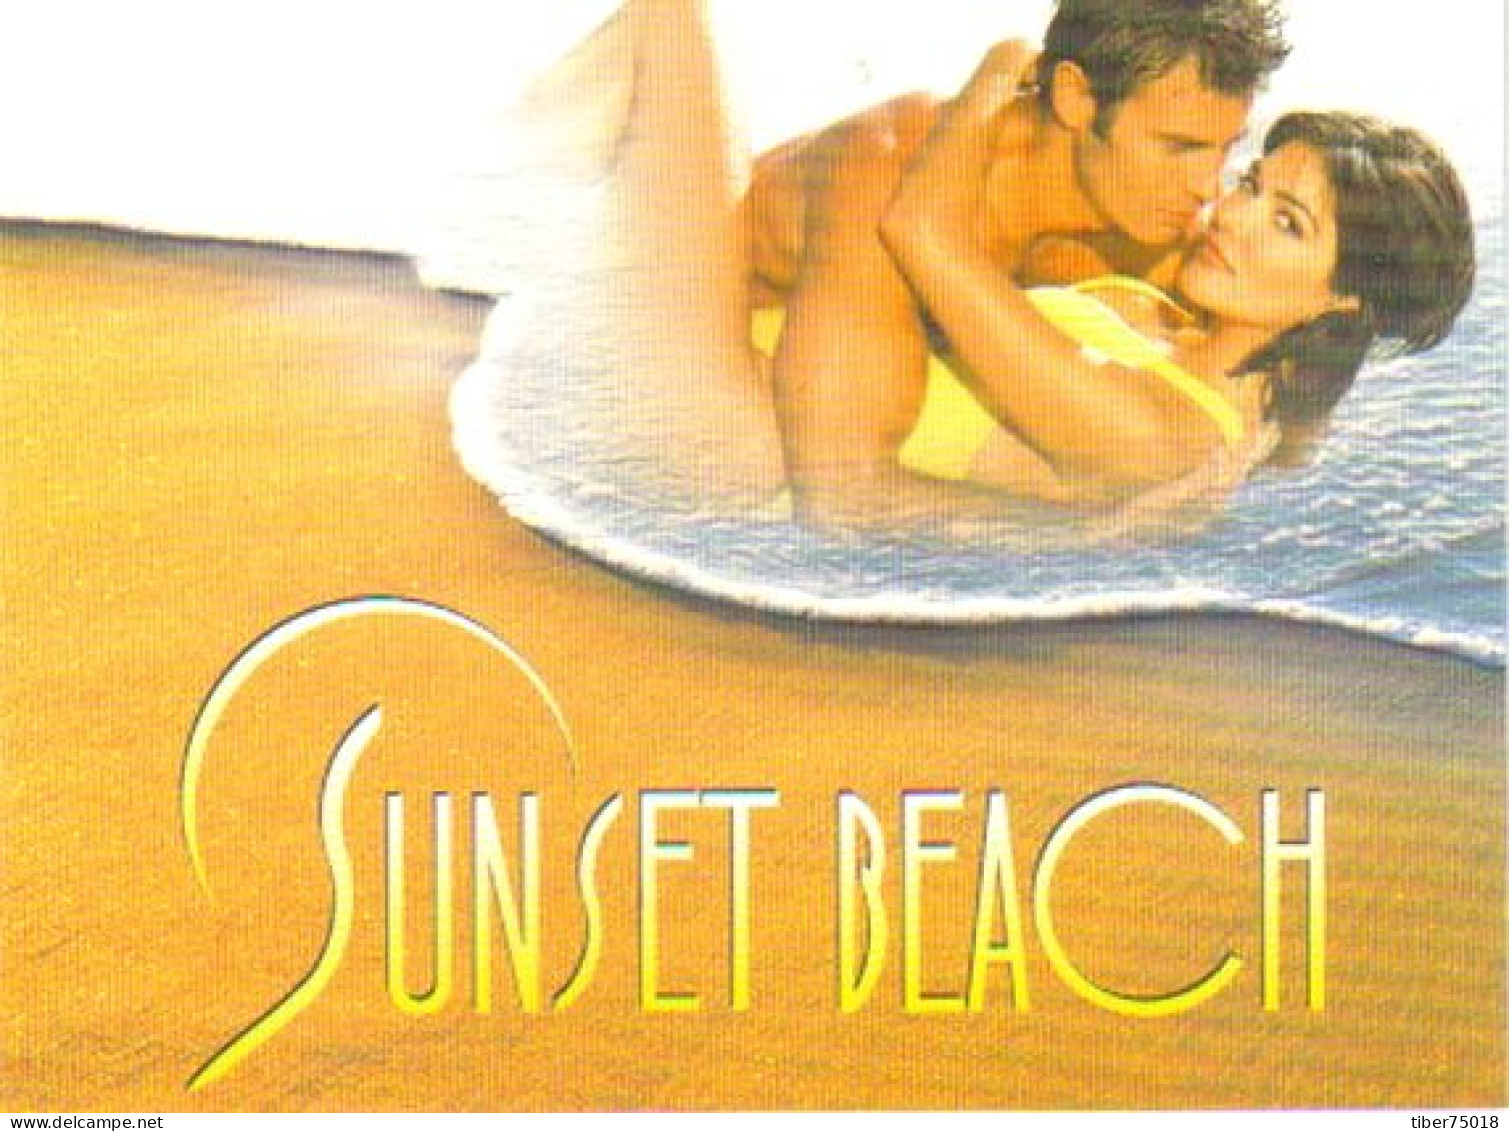 Carte Postale (Tower Records) Sunset Beach (cinéma - Film - Affiche) - Posters Op Kaarten